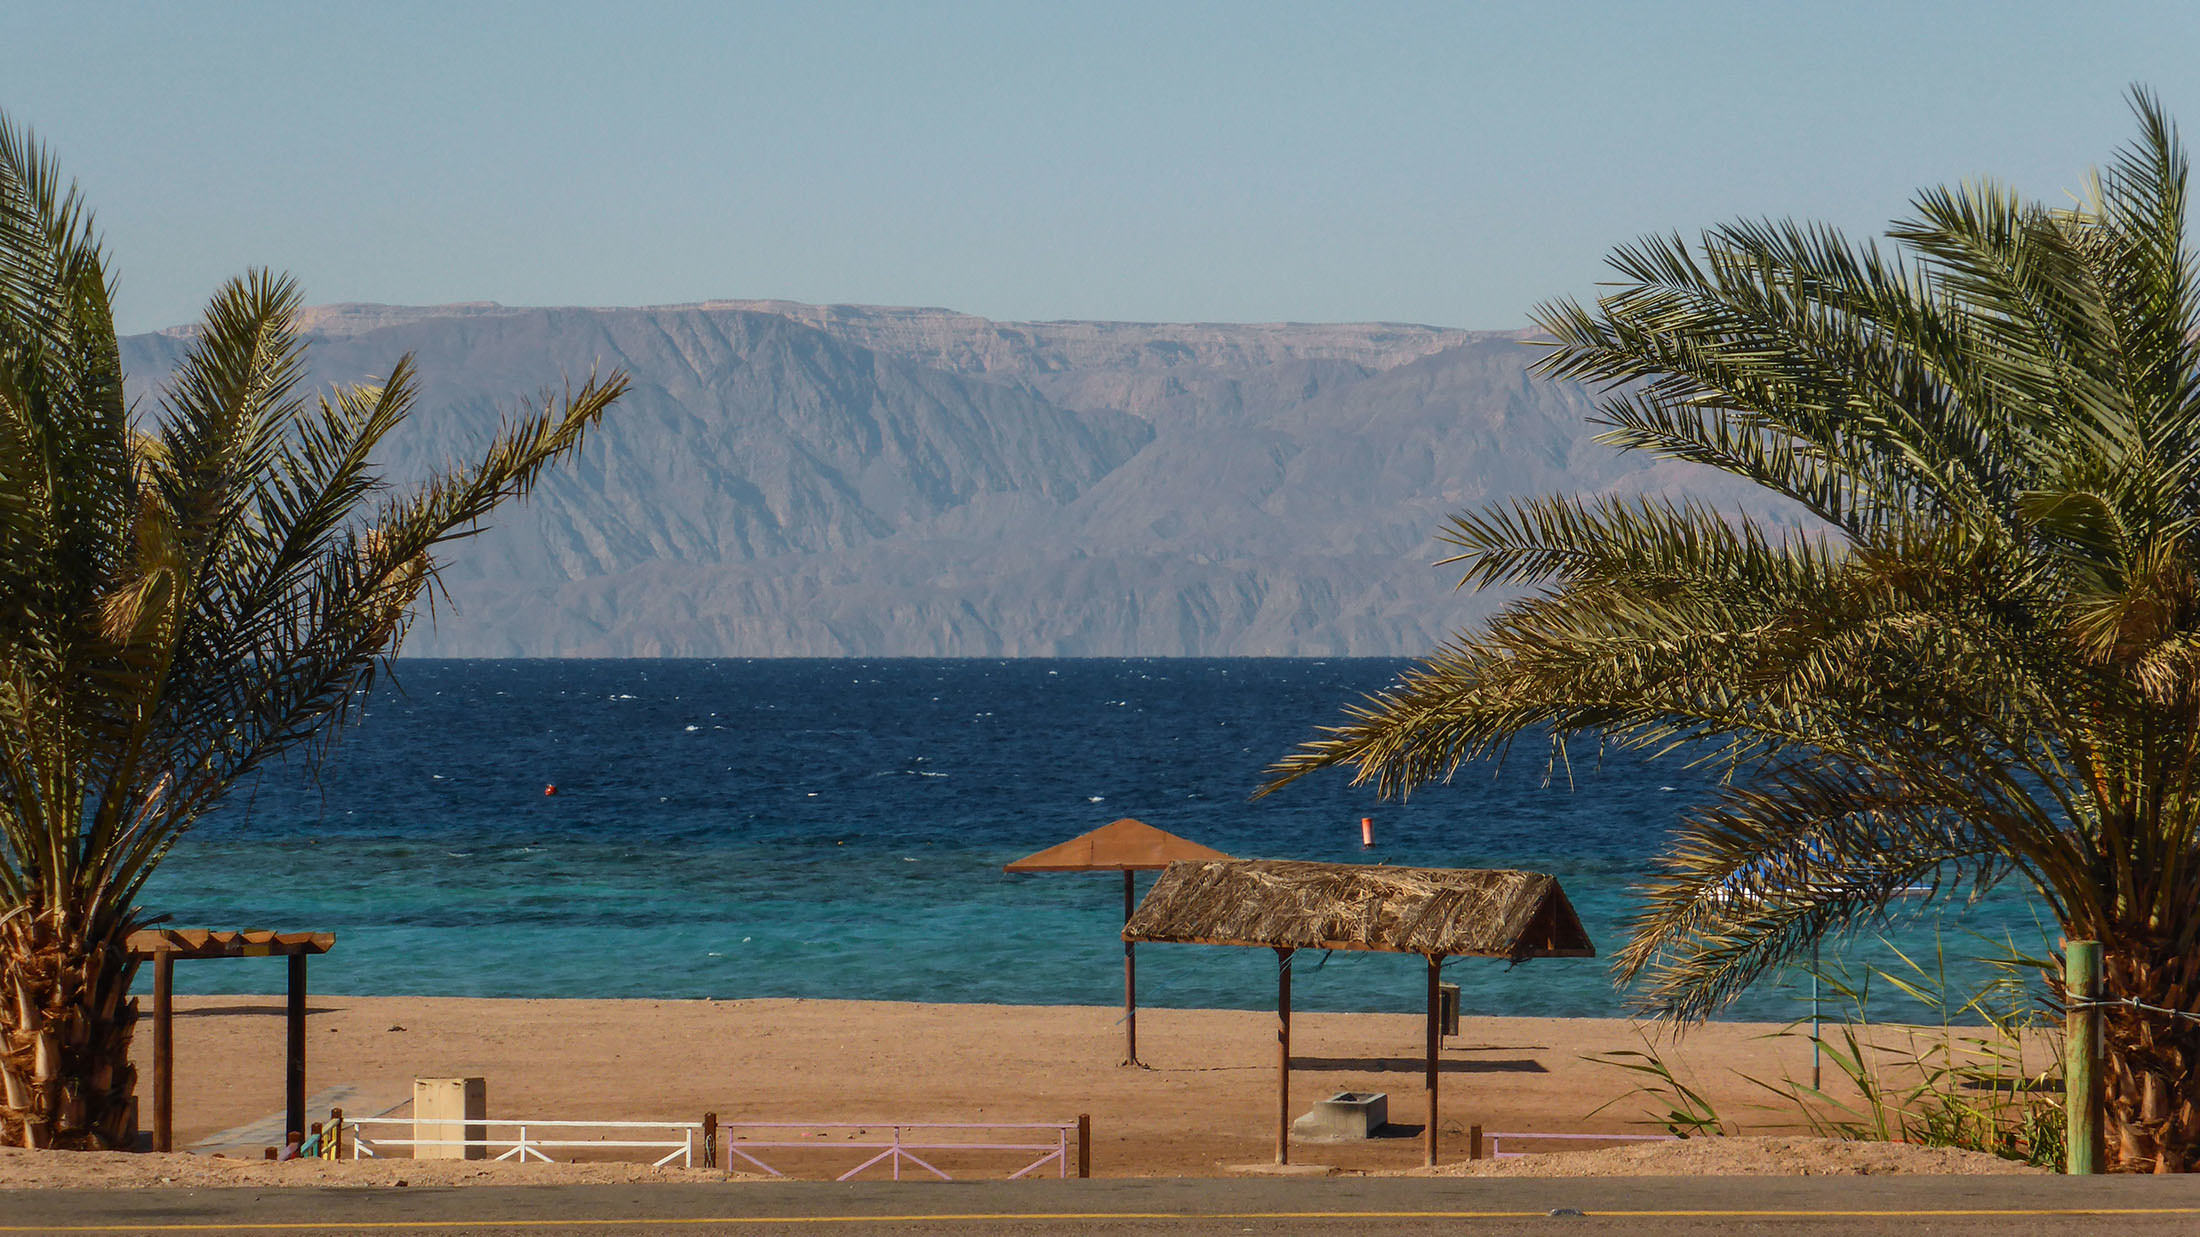 A beach on the Red Sea near Aqaba Jordan